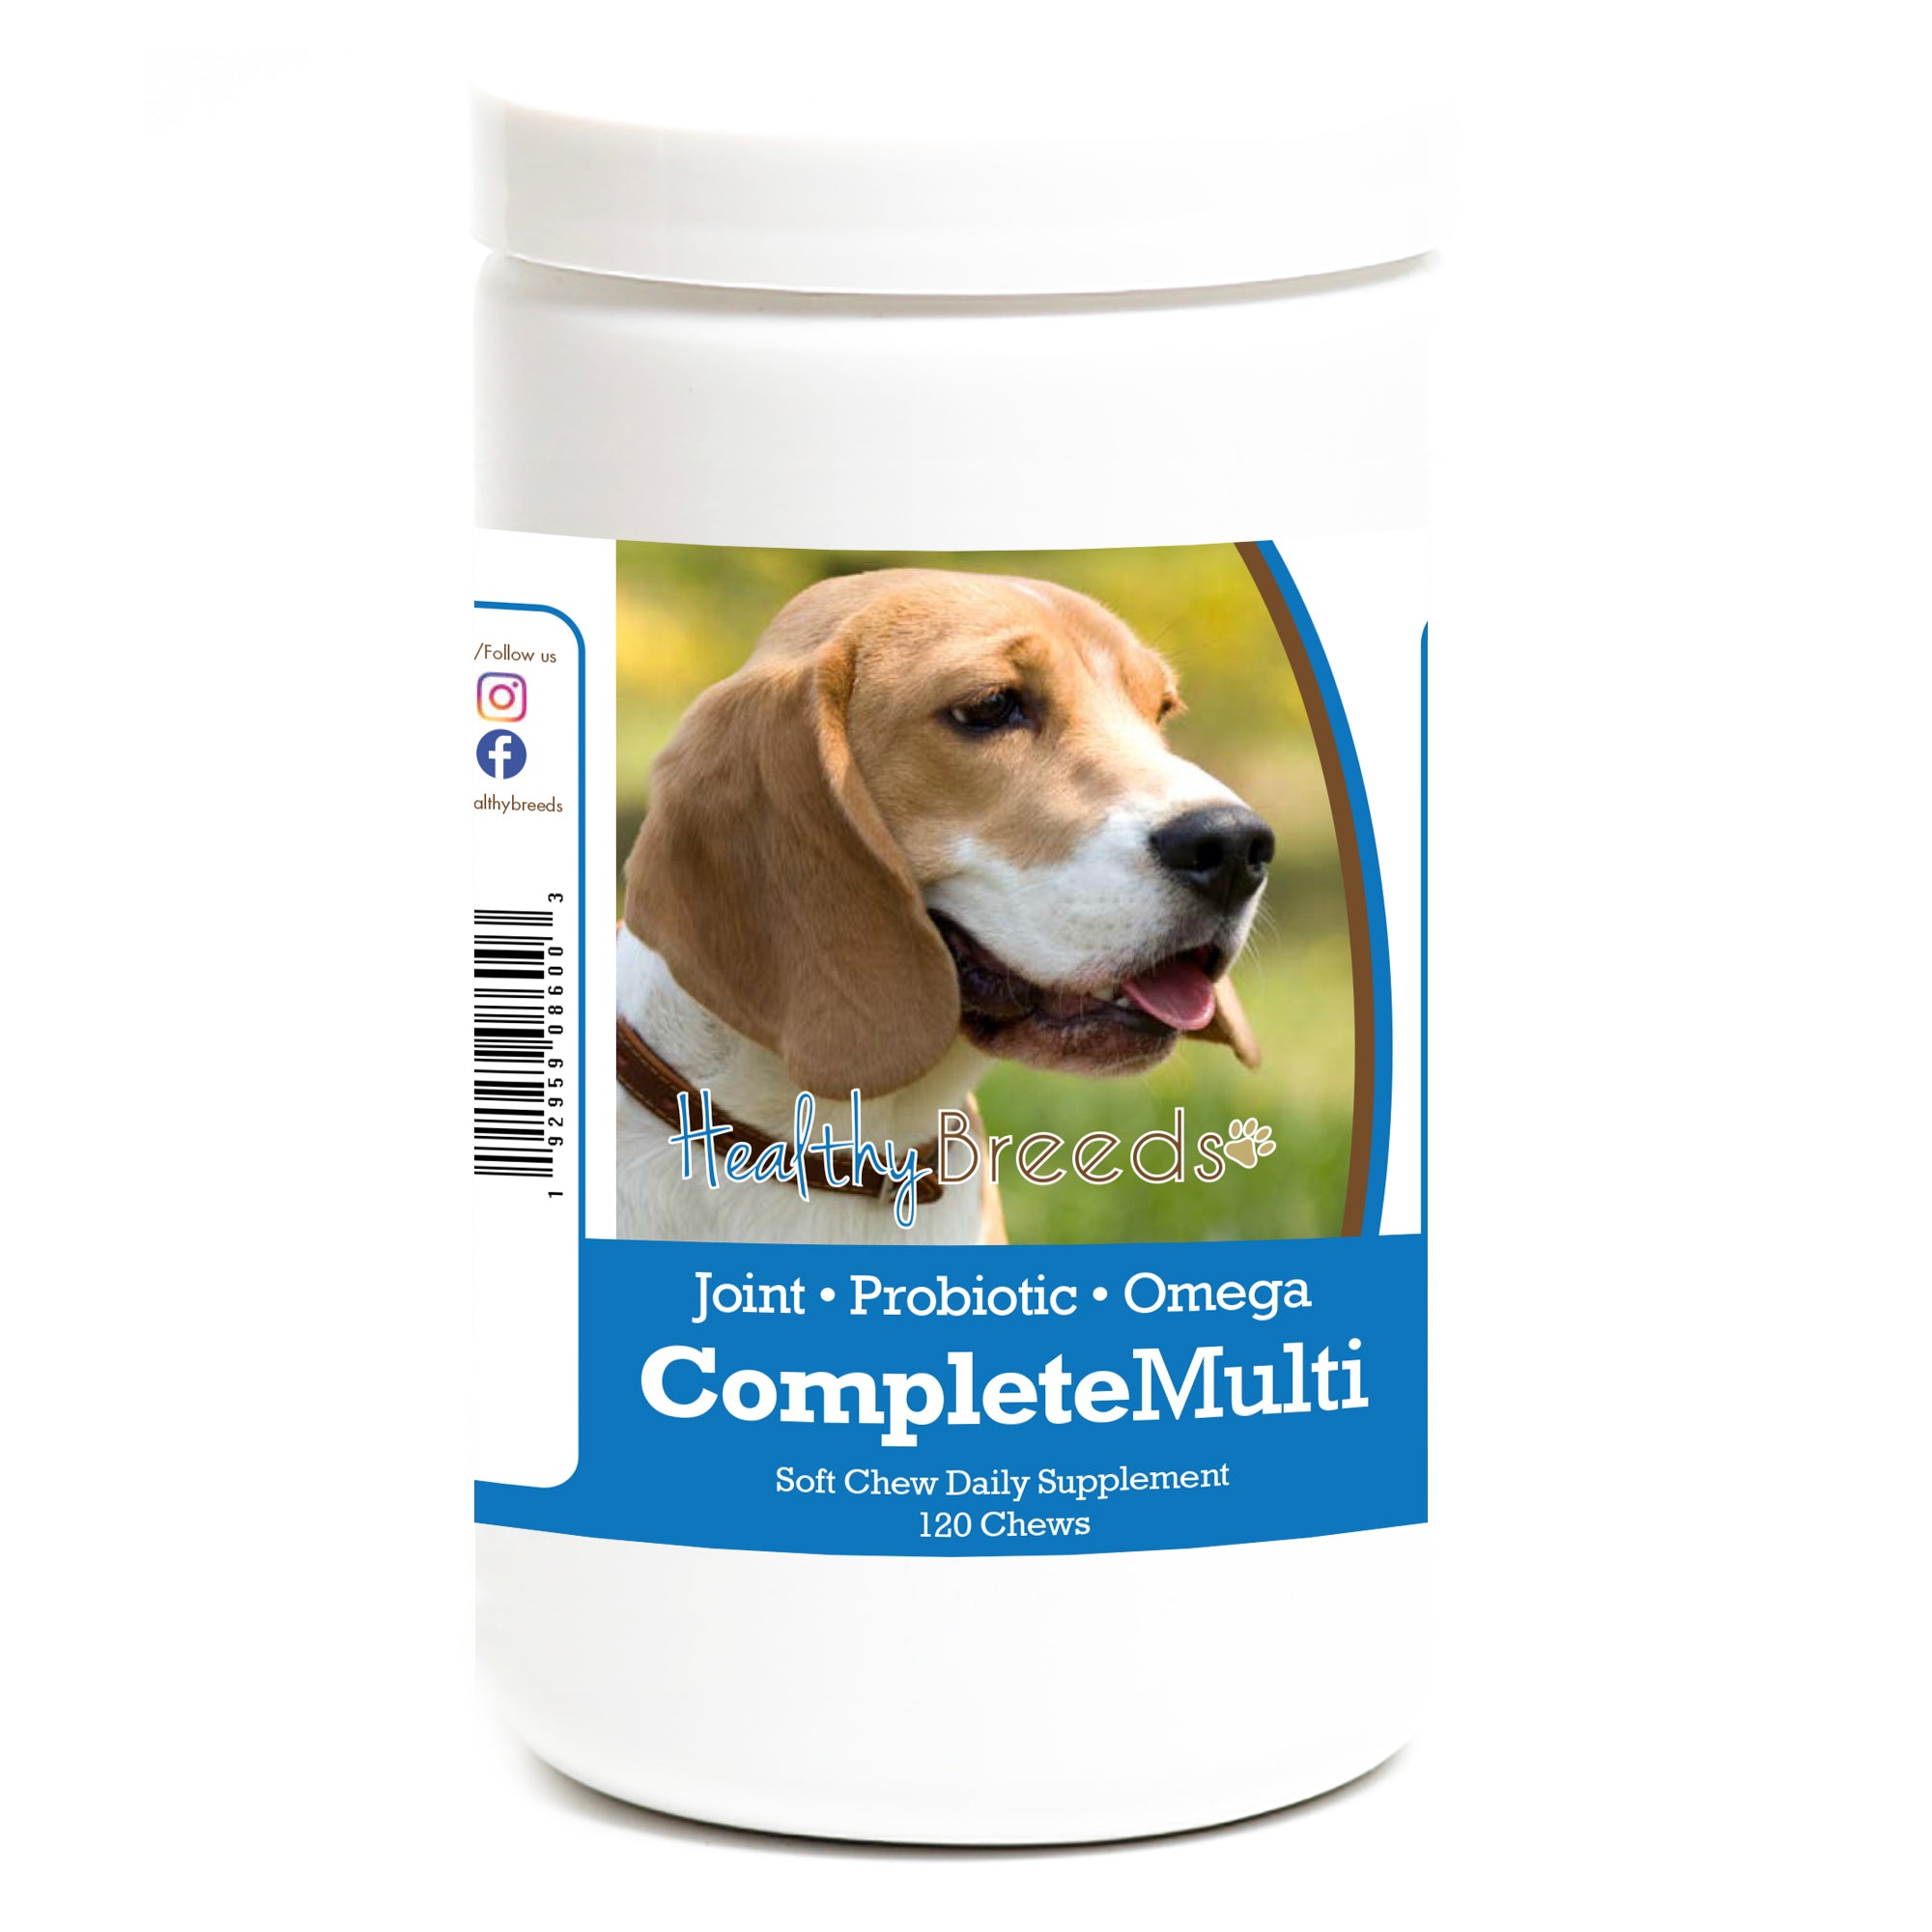 Beagle All In One Multivitamin Soft Chew 120 Count